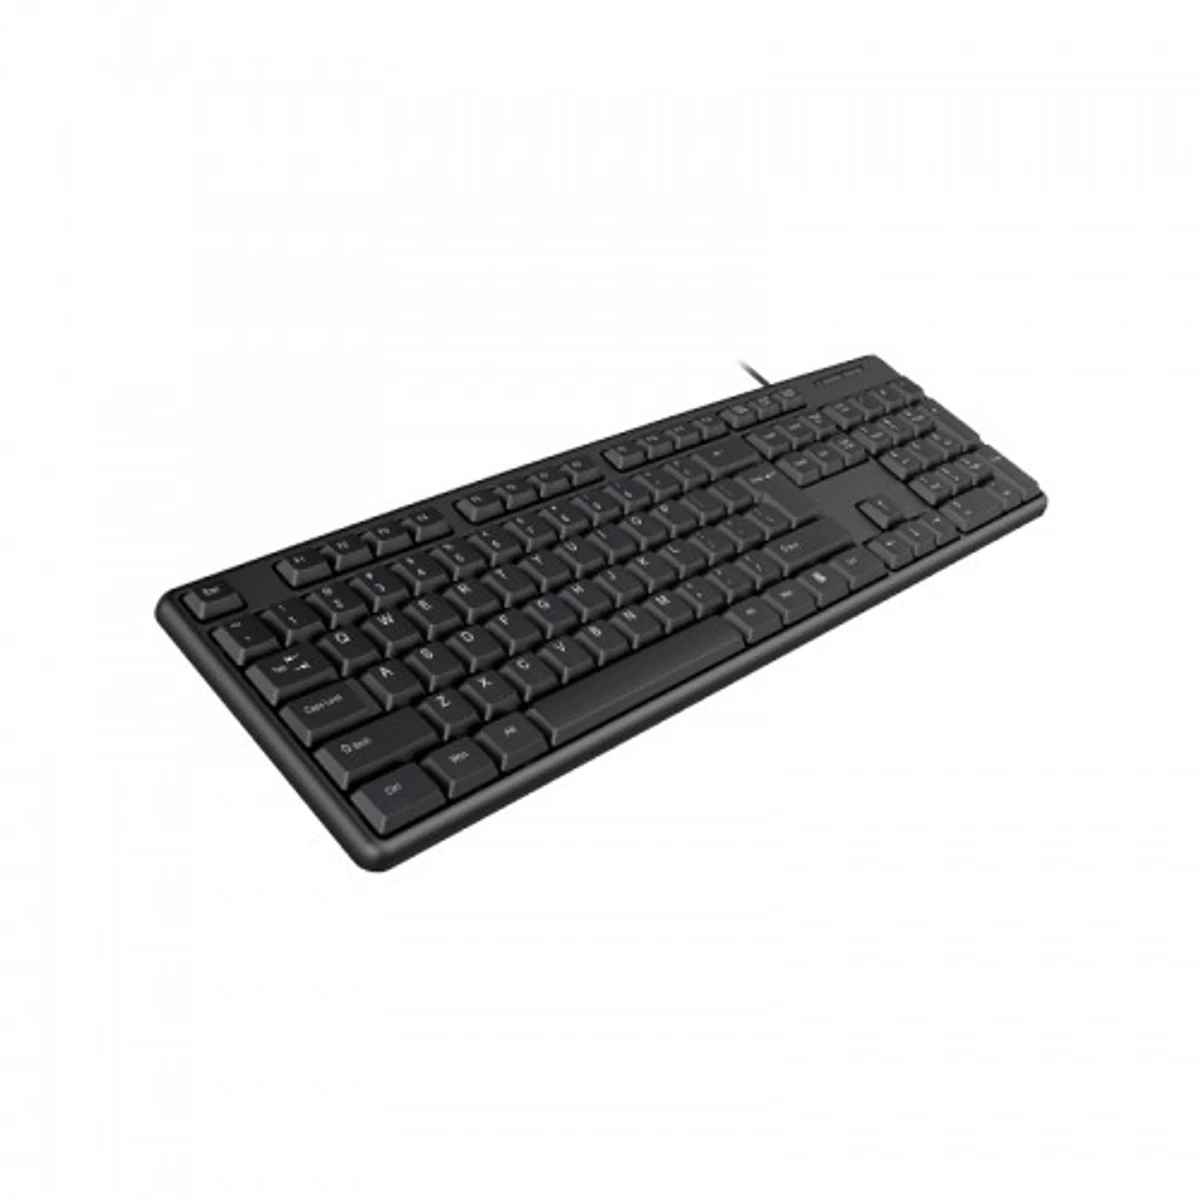 Havit KB271 USB Exquisite Keyboard with Bangla